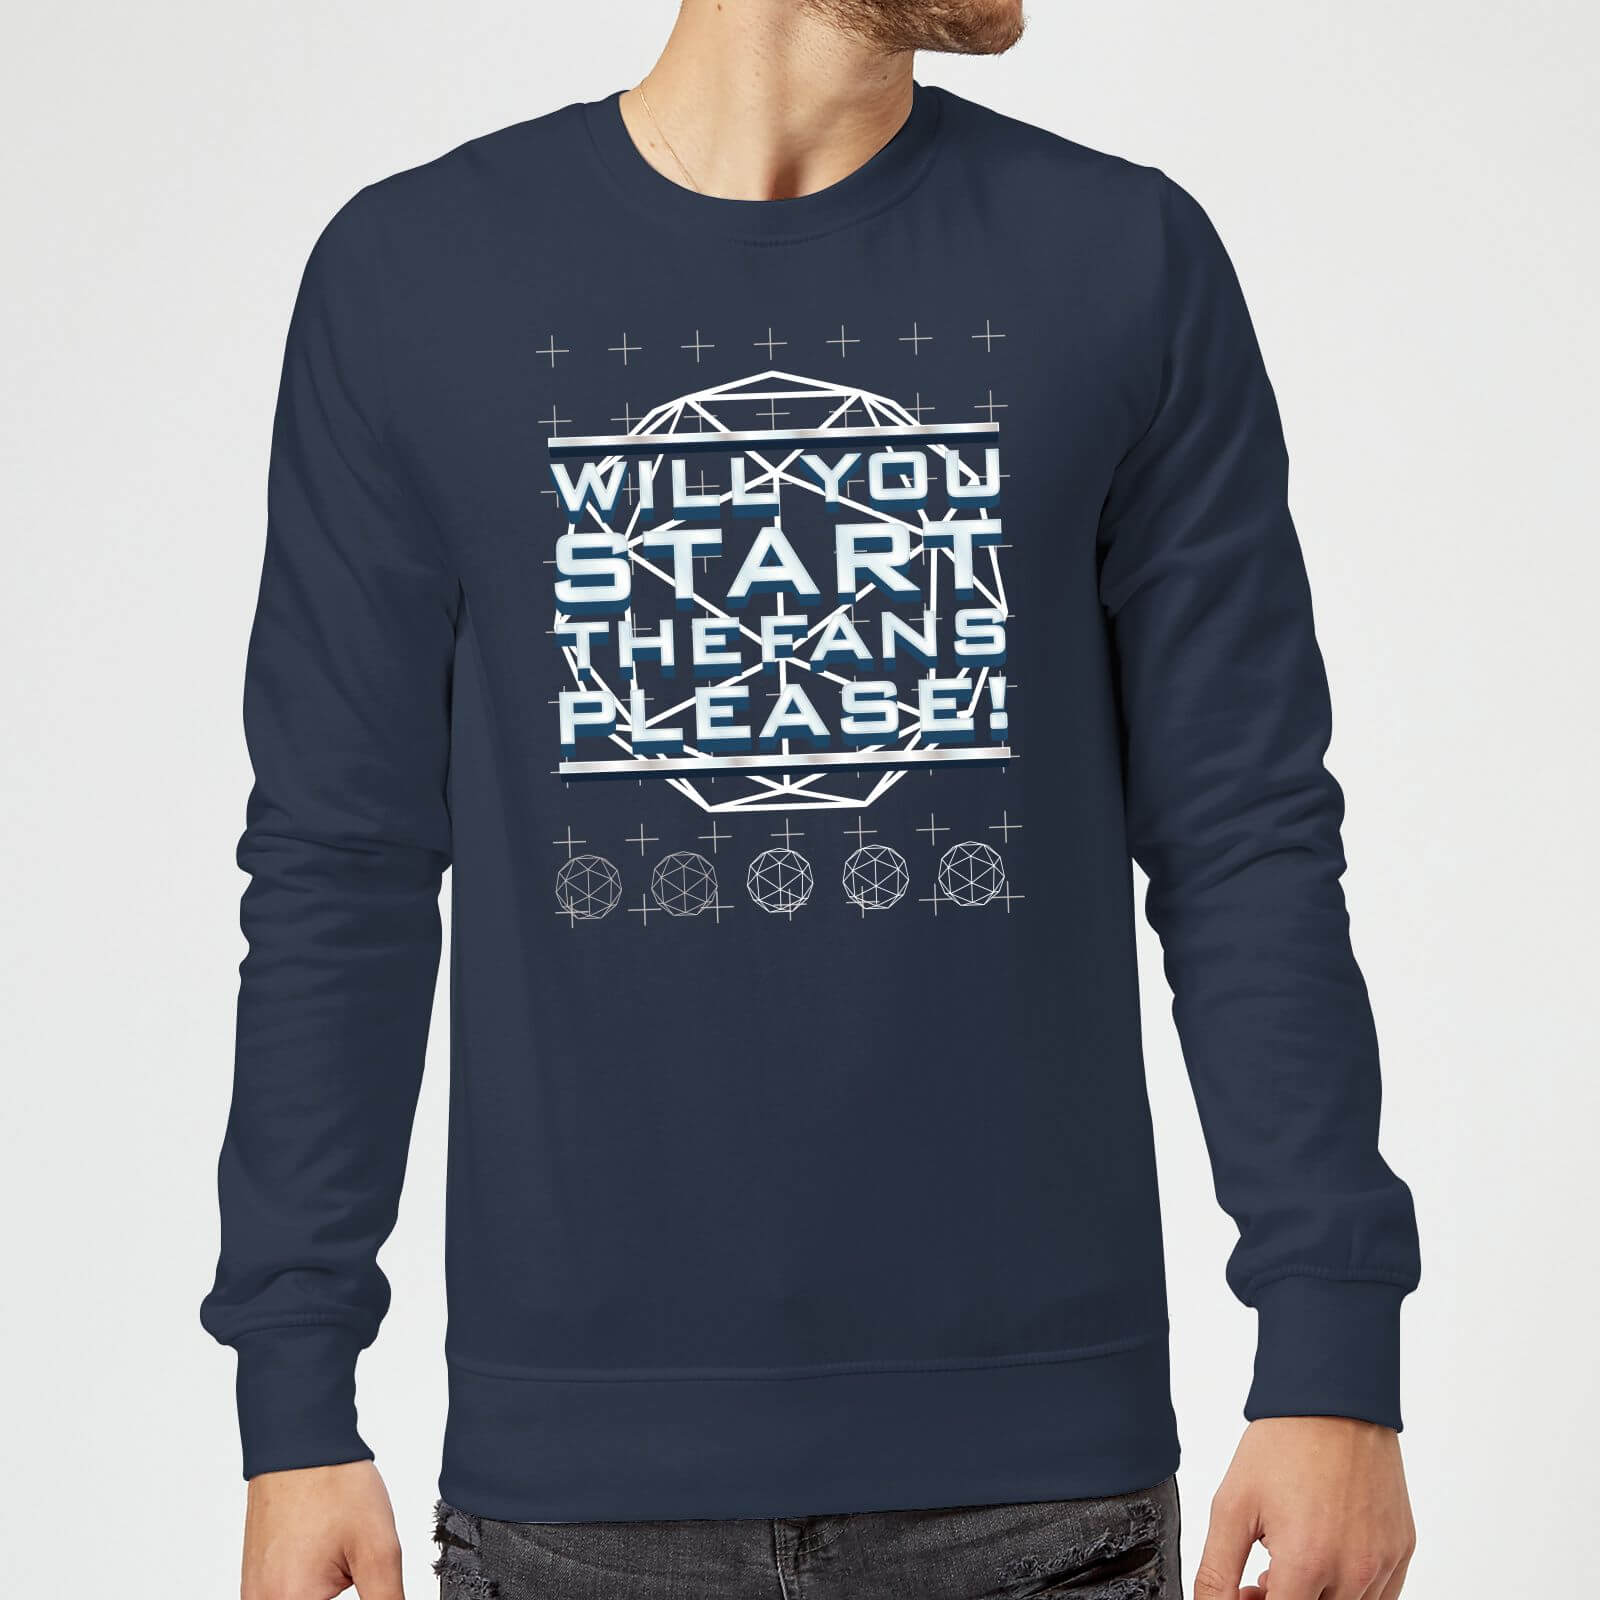 Crystal Maze Will You Start The Fans Please! Sweatshirt - Navy - S - Navy